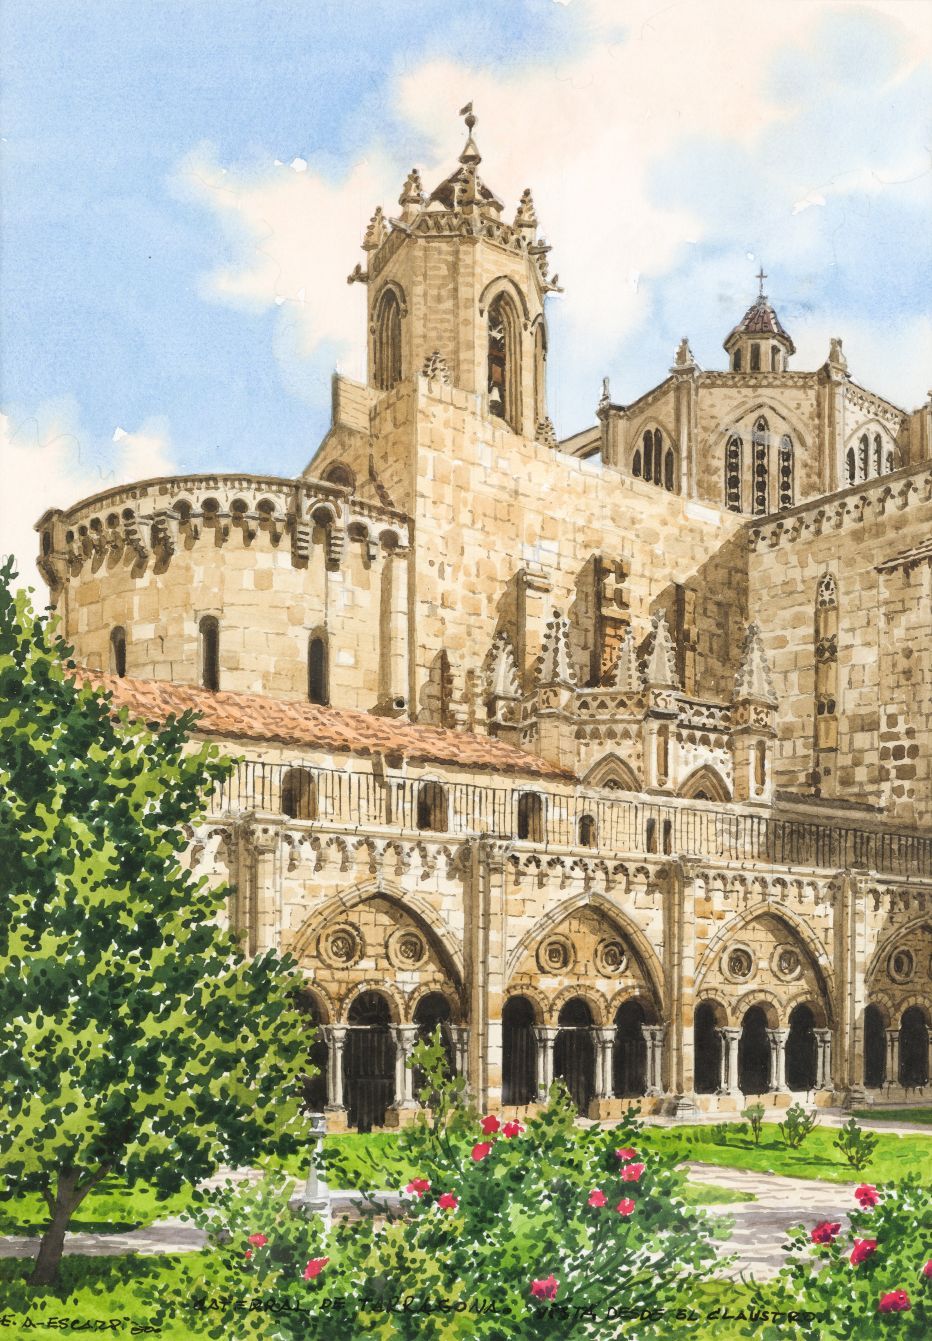 EDUARDO ÁLVAREZ-ESCARPIZO (C.20th / .) "Tarragona Cathedral seen from the cloist&hellip;